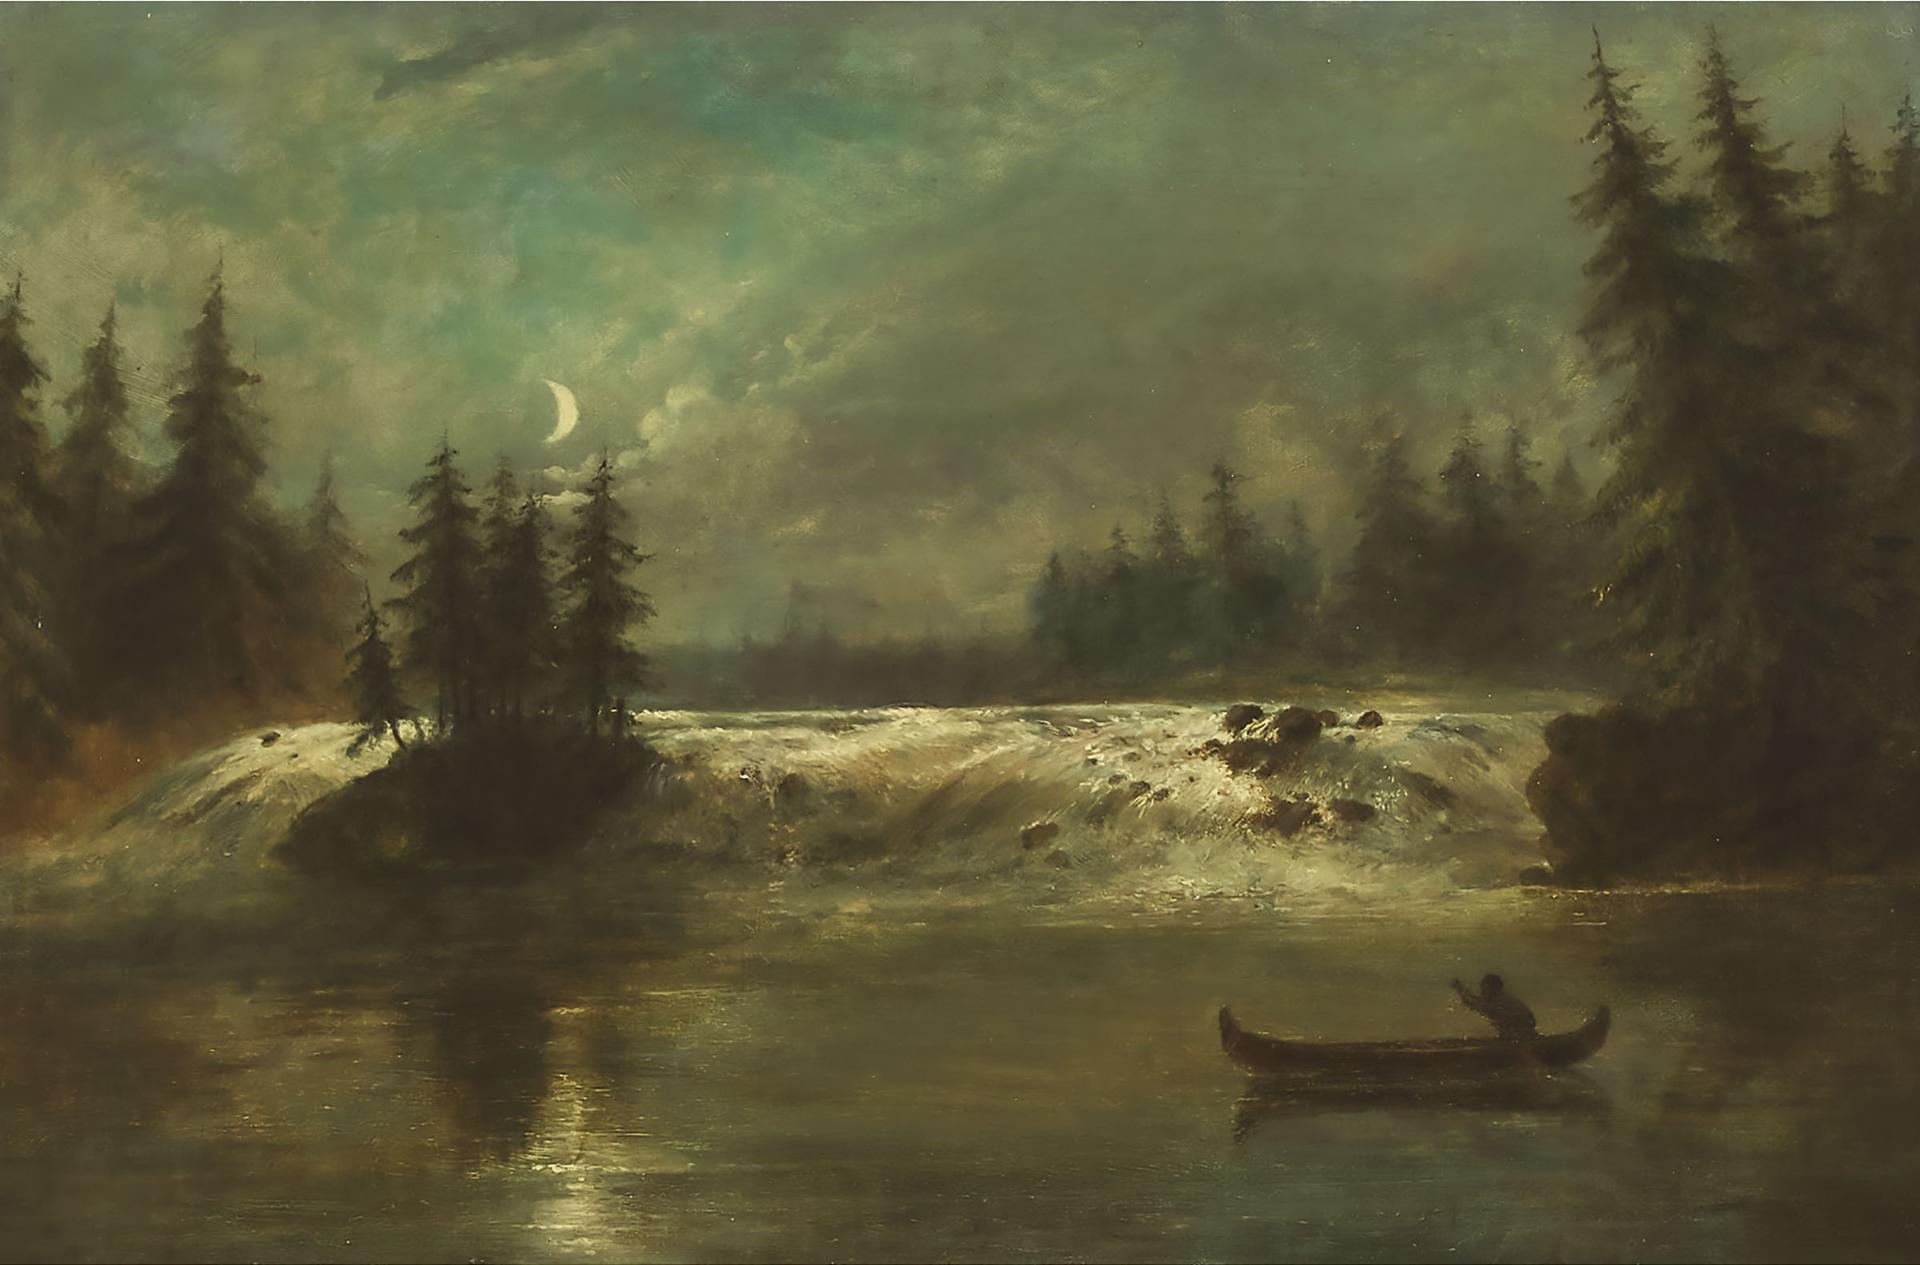 Cornelius David Krieghoff (1815-1872) - Moonlight On The Rapids